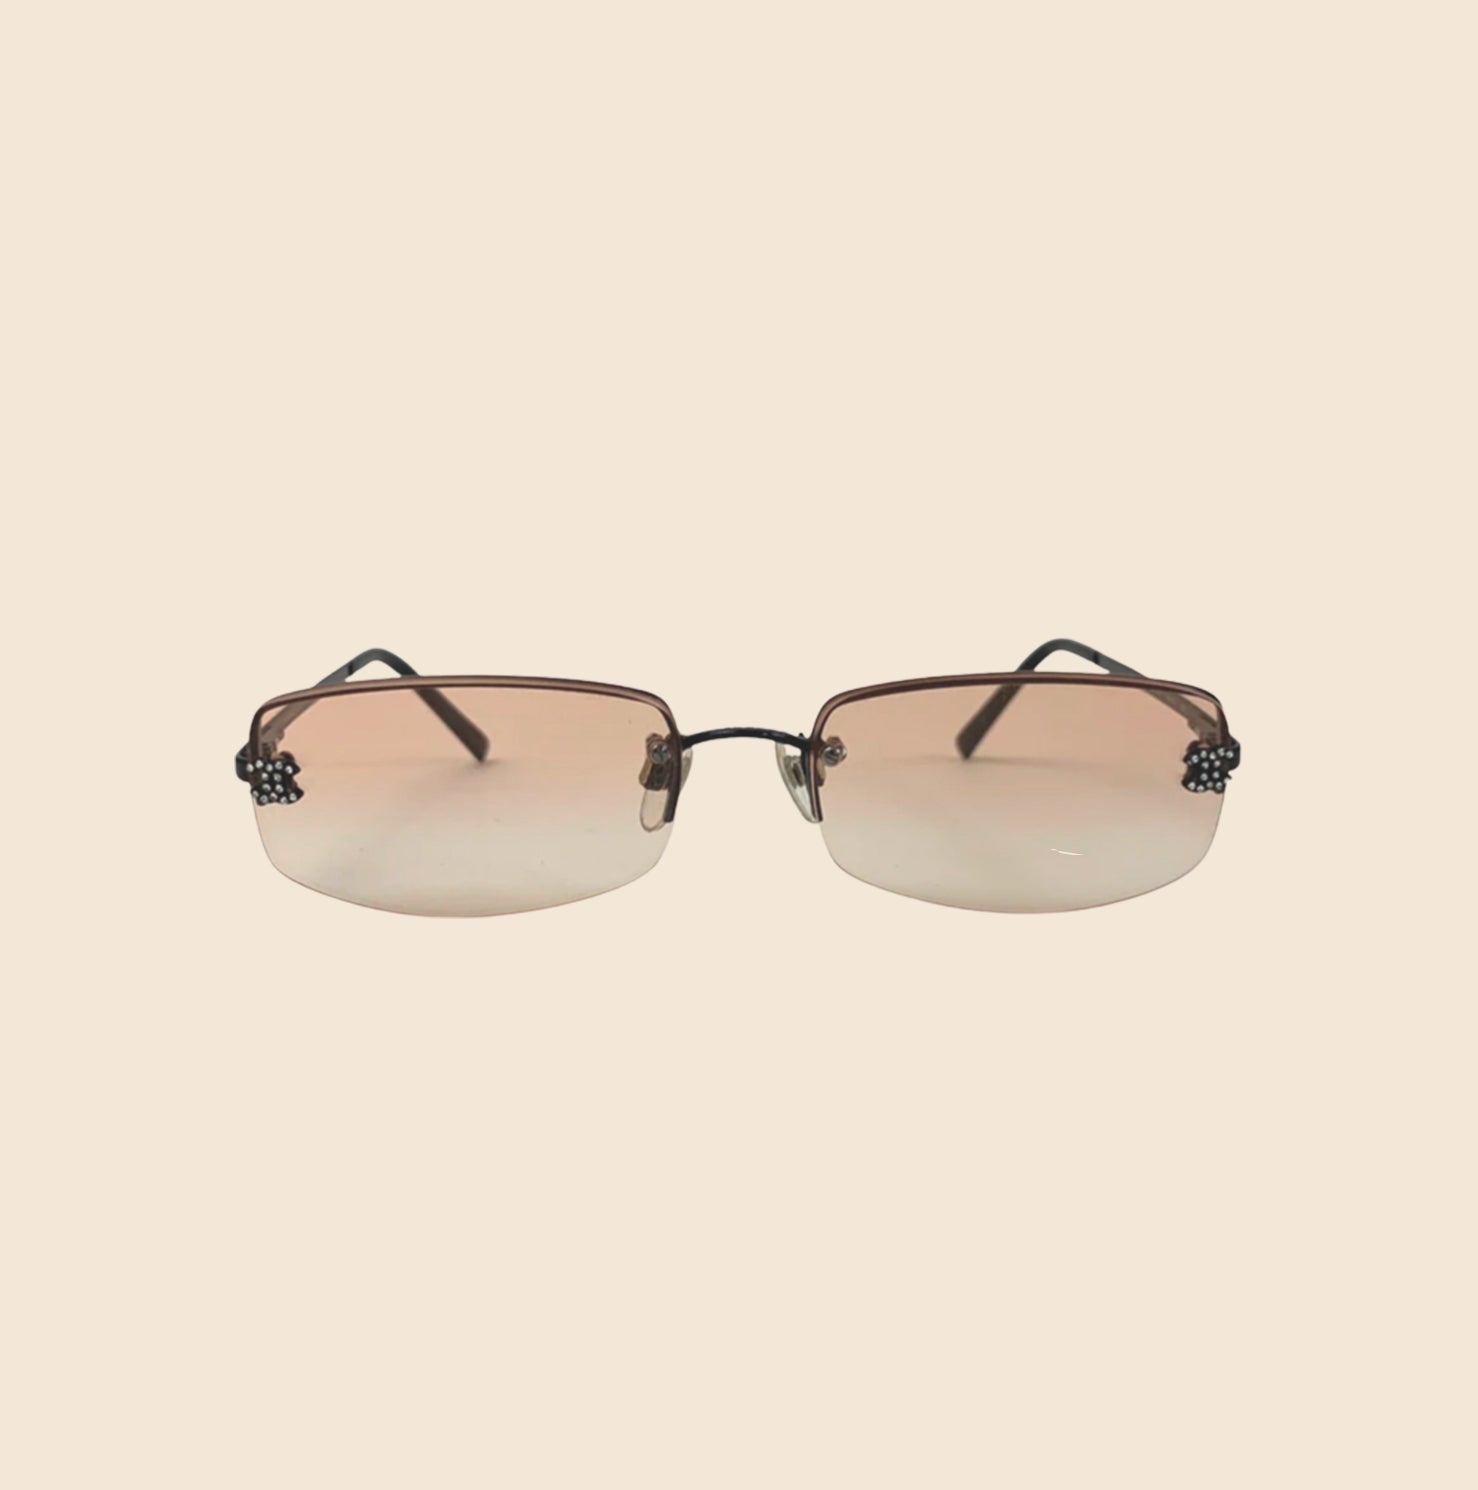 Chanel sunglasses 4017 - Gem